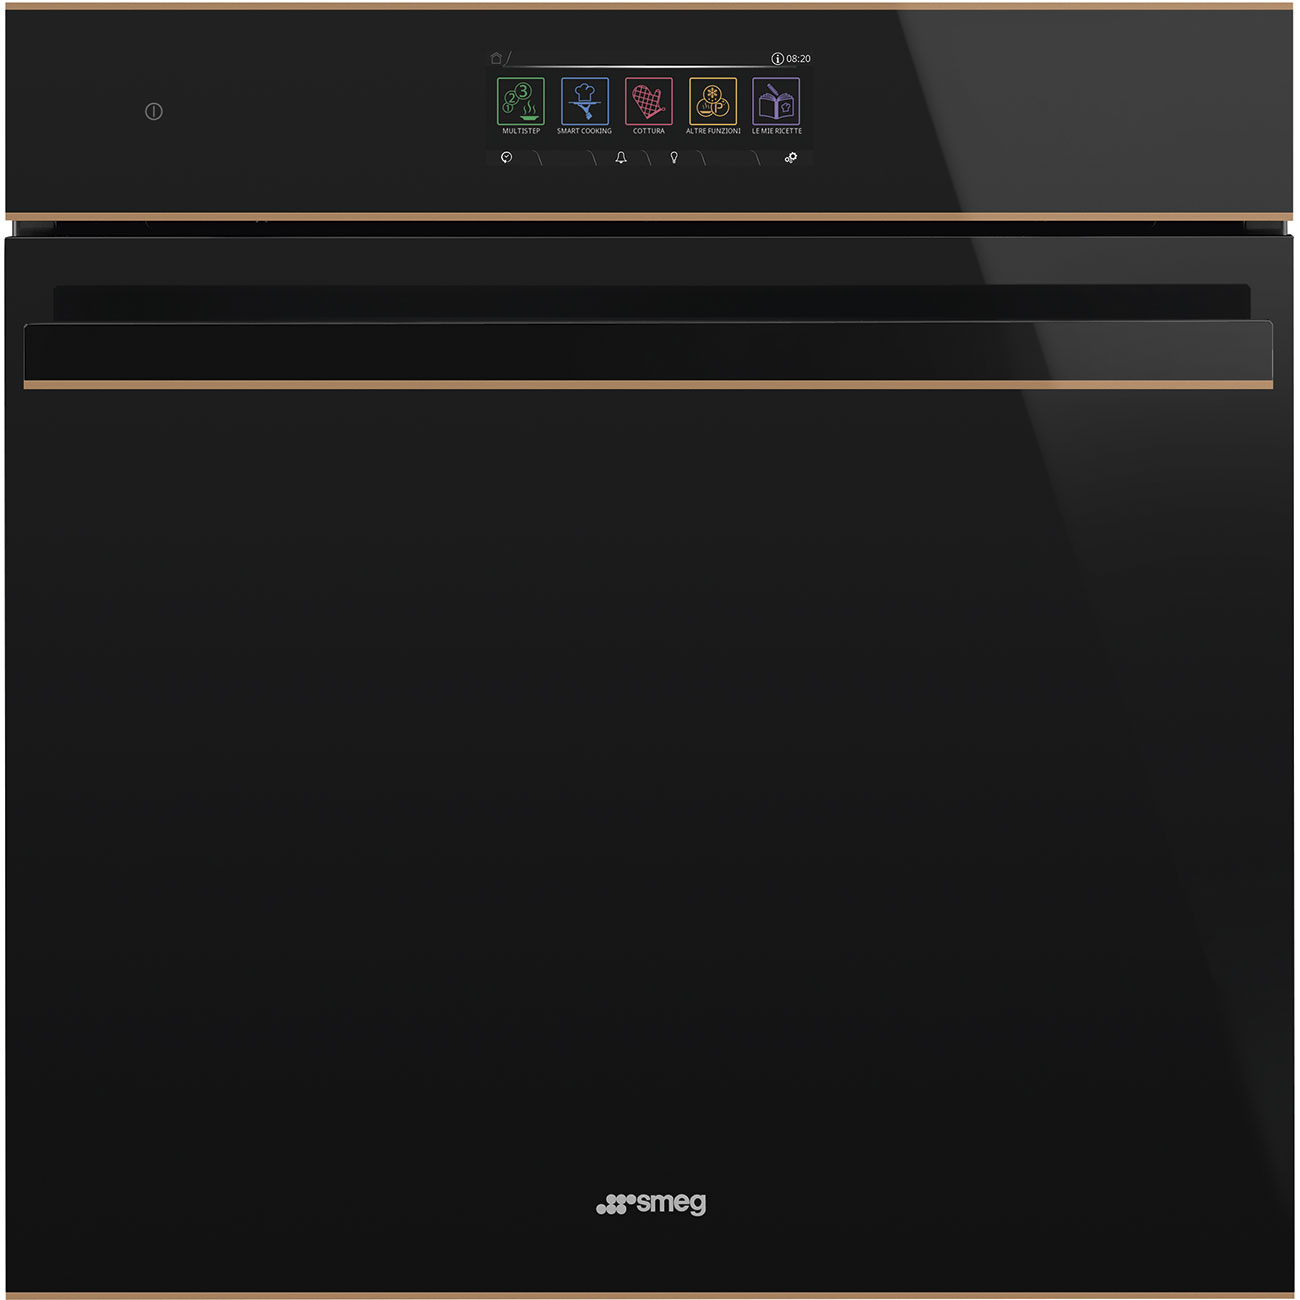 Combi Microwave Oven 60cm Smeg_1